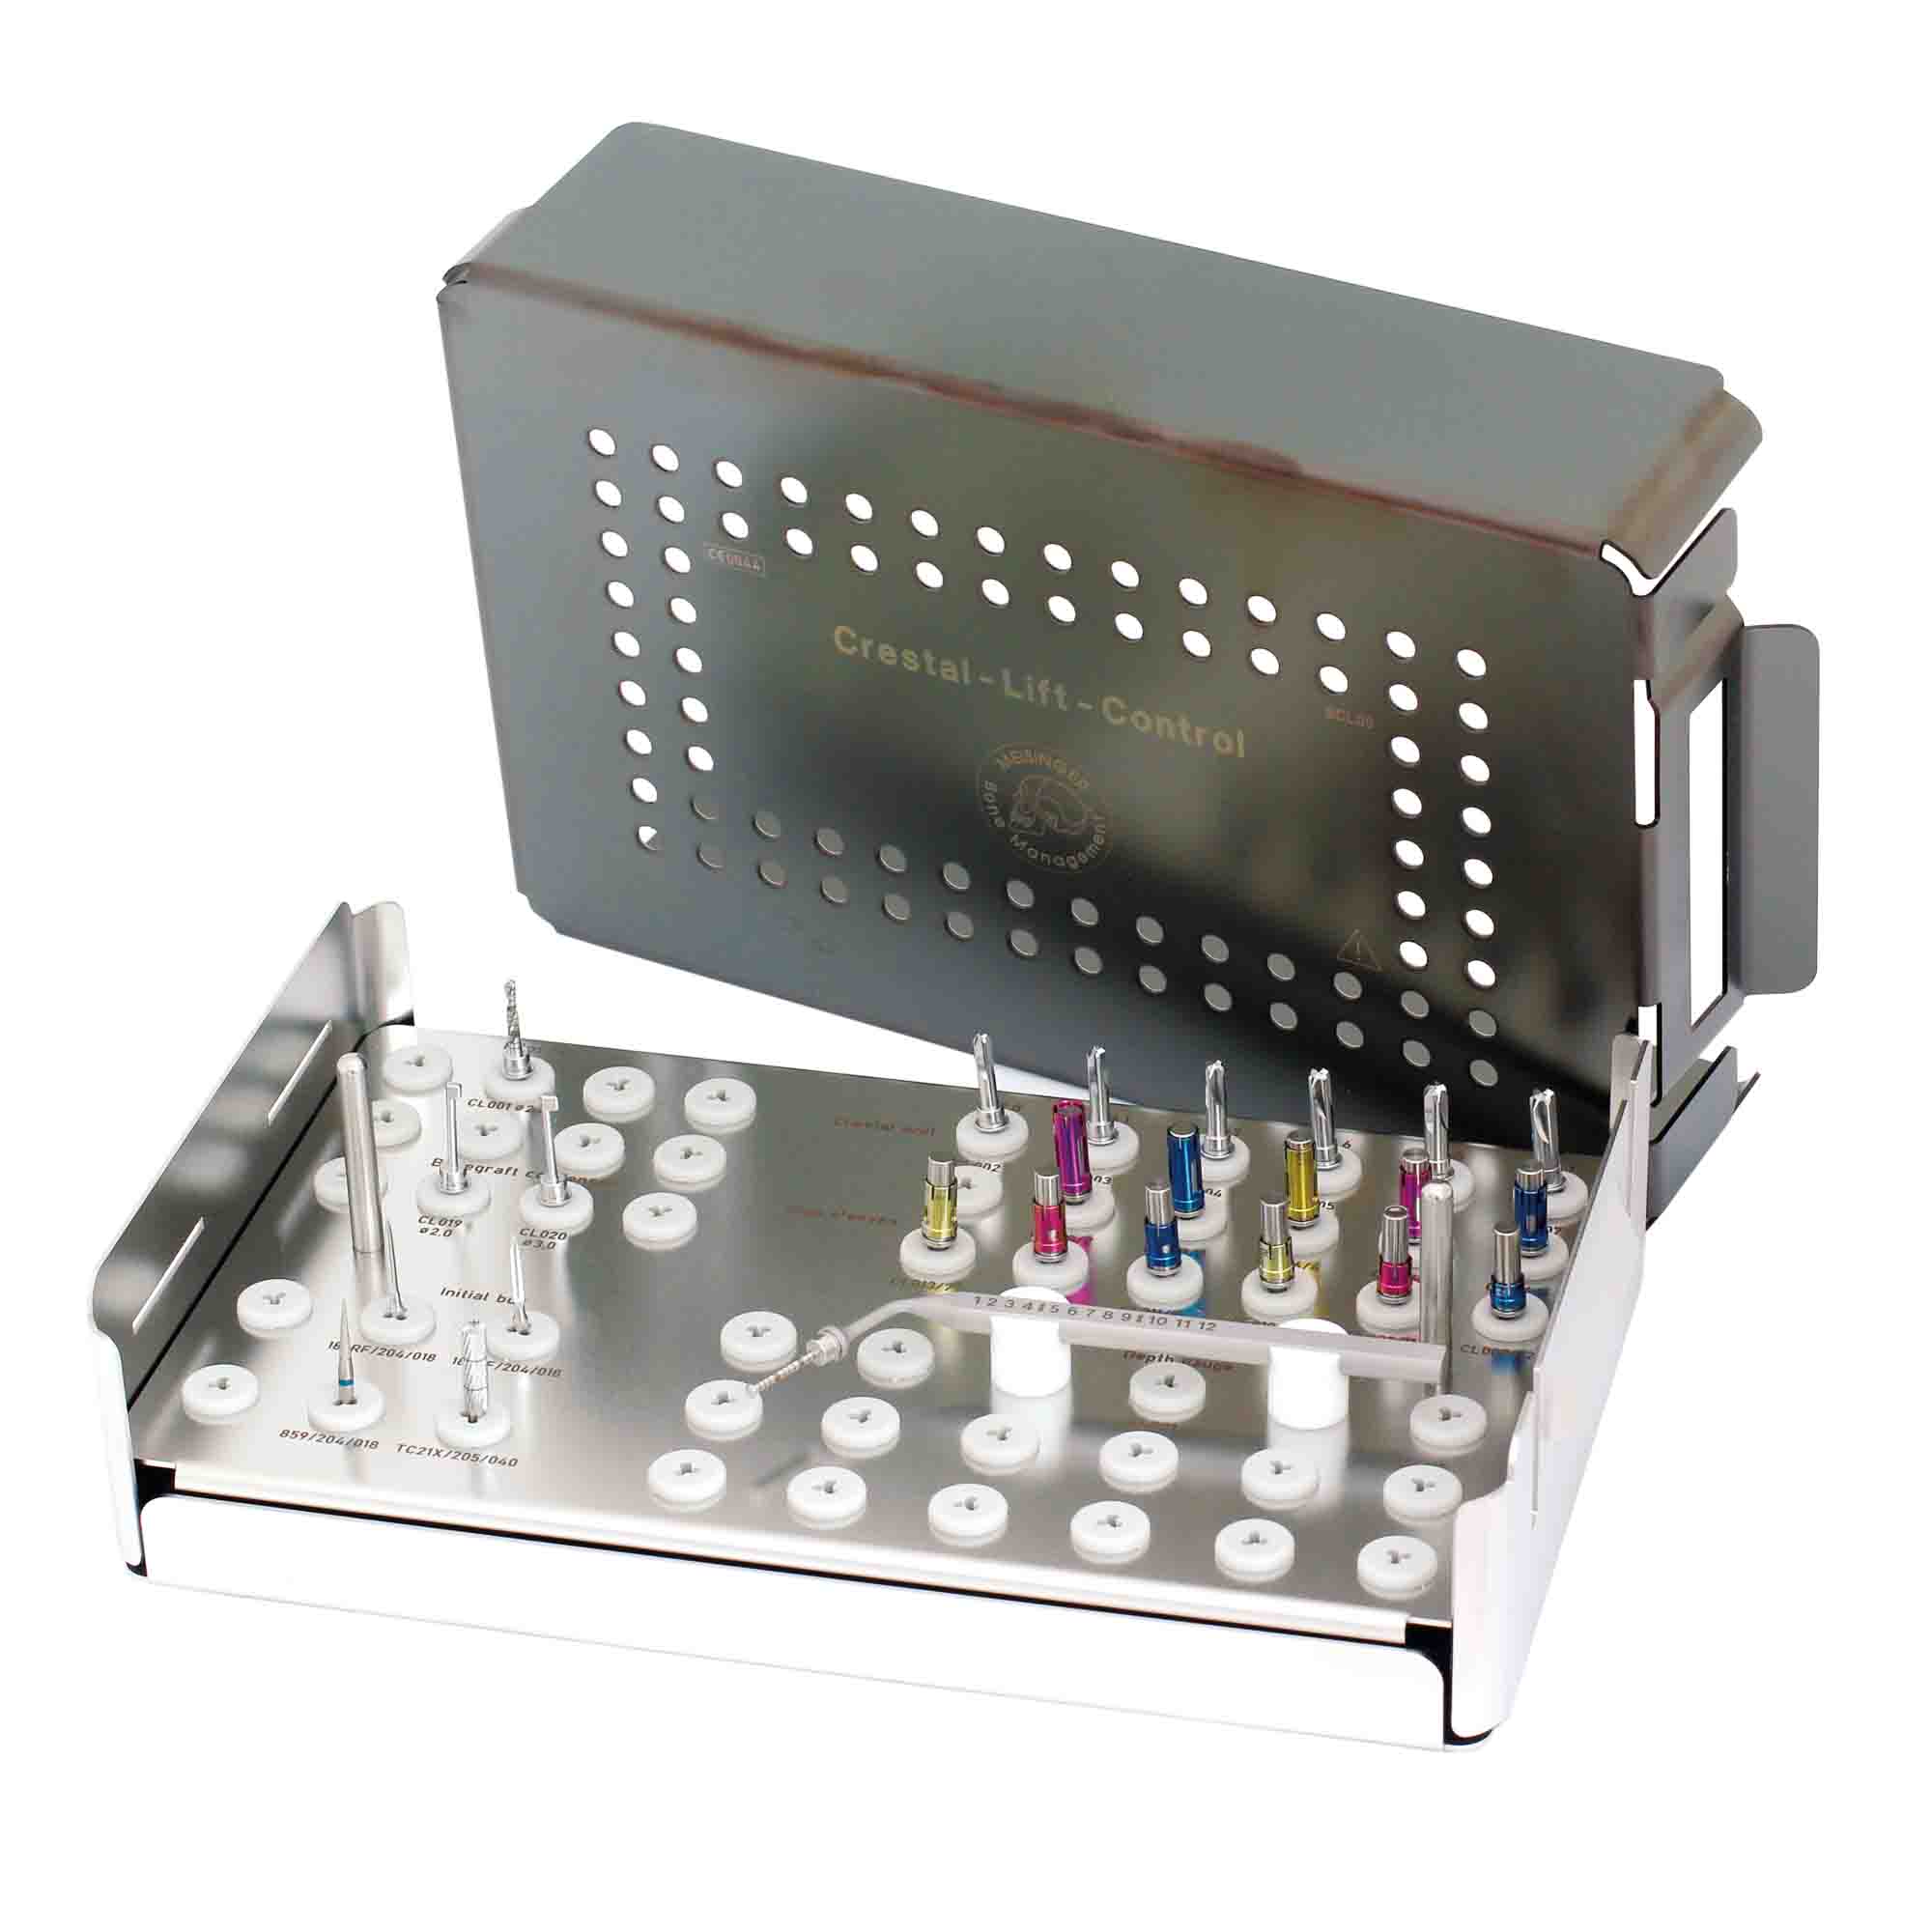 BCL00 Crestal-Lift-Control Kit, Comprehensive Crestal Approach Sinus Lift System